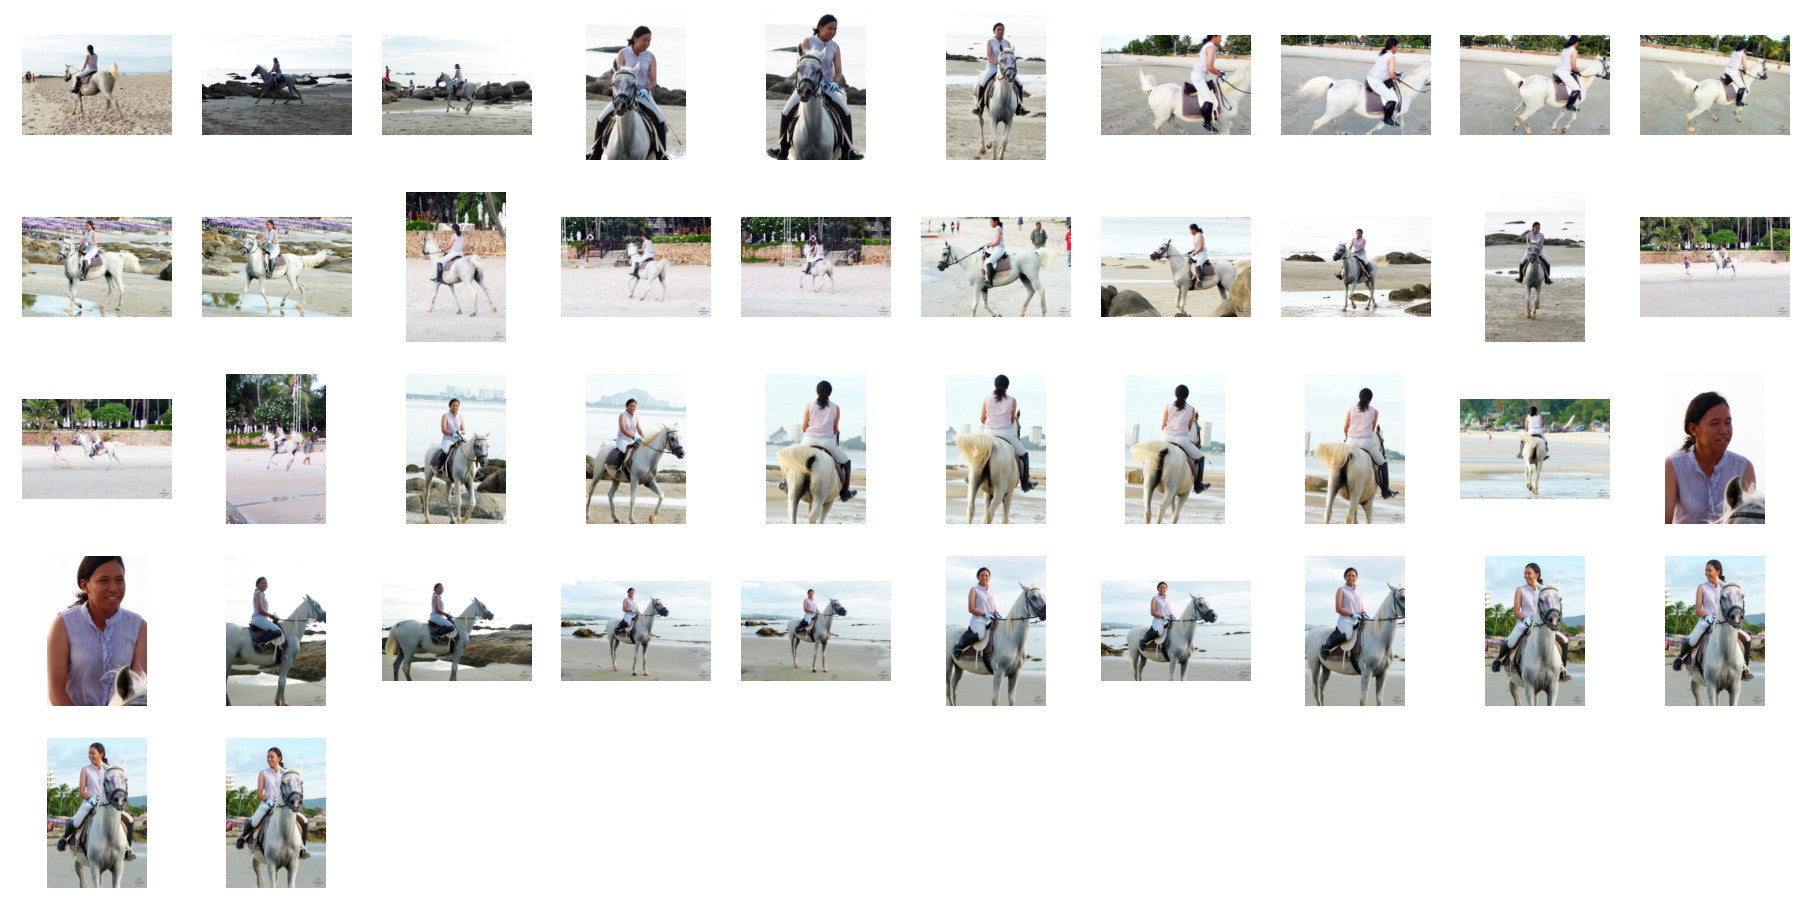 Nam in Jodhpurs Riding with Saddle on White Arabian Horse, Part 3 - Riding.Vision